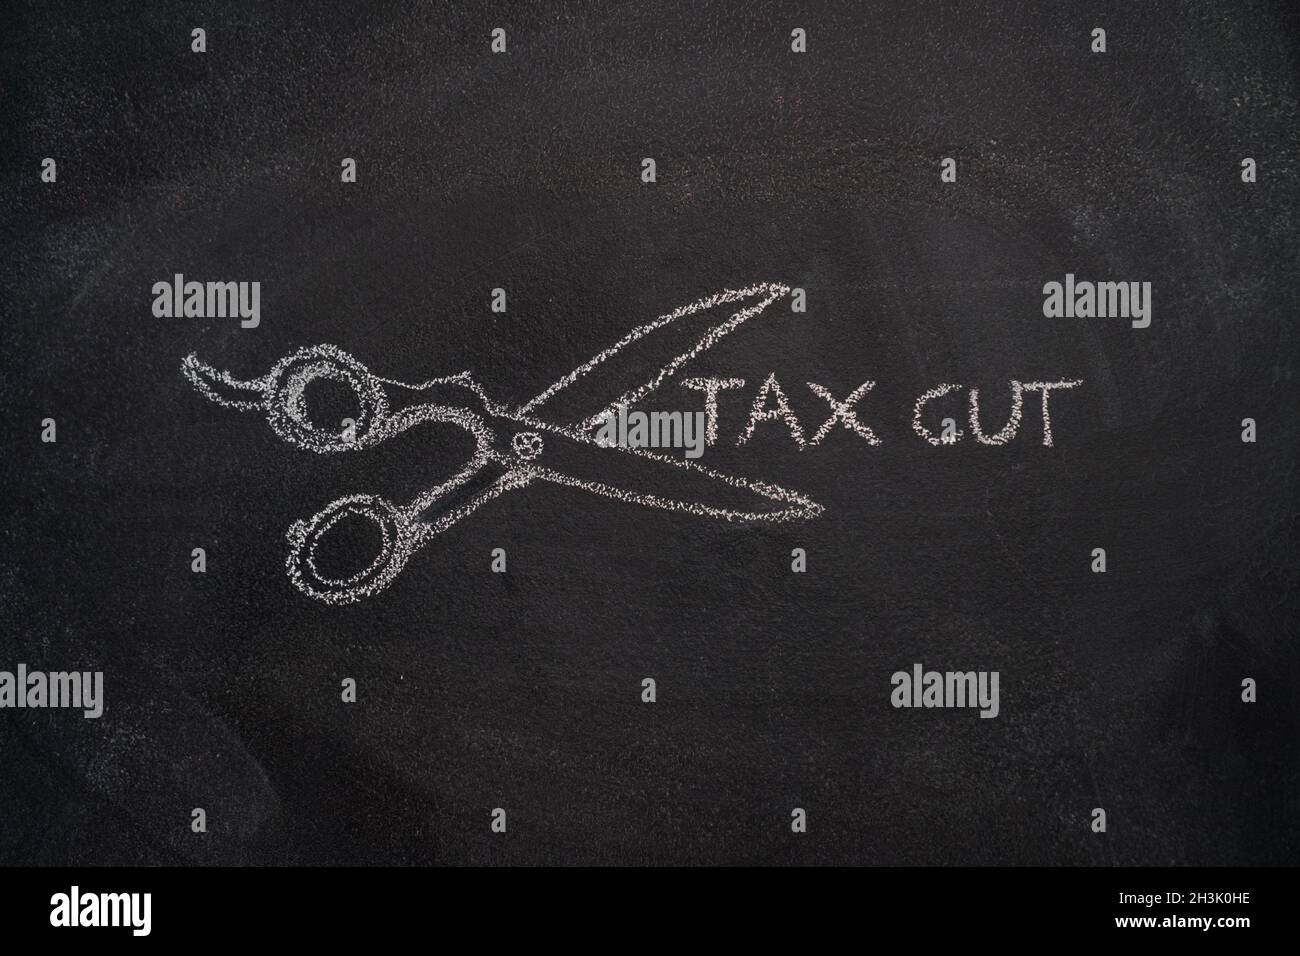 Scissors with tax cut writing on chalkboard Stock Photo